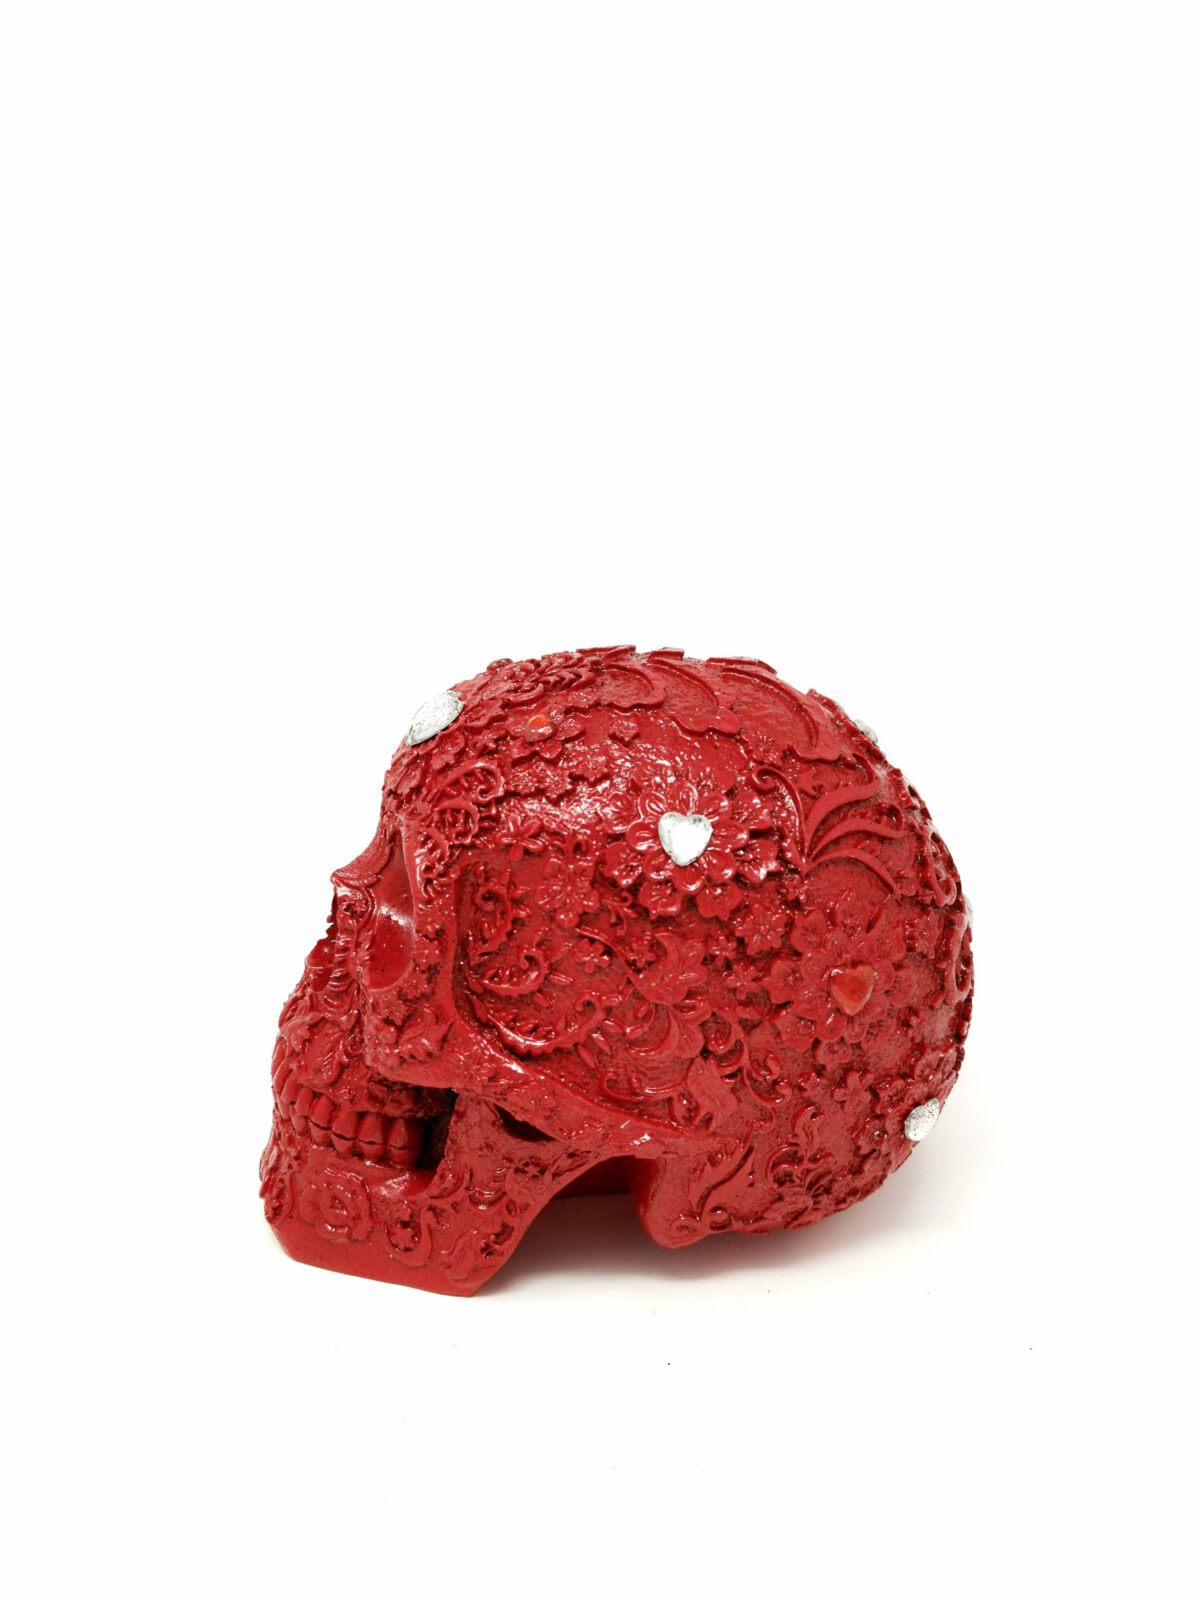 Skull Valentine